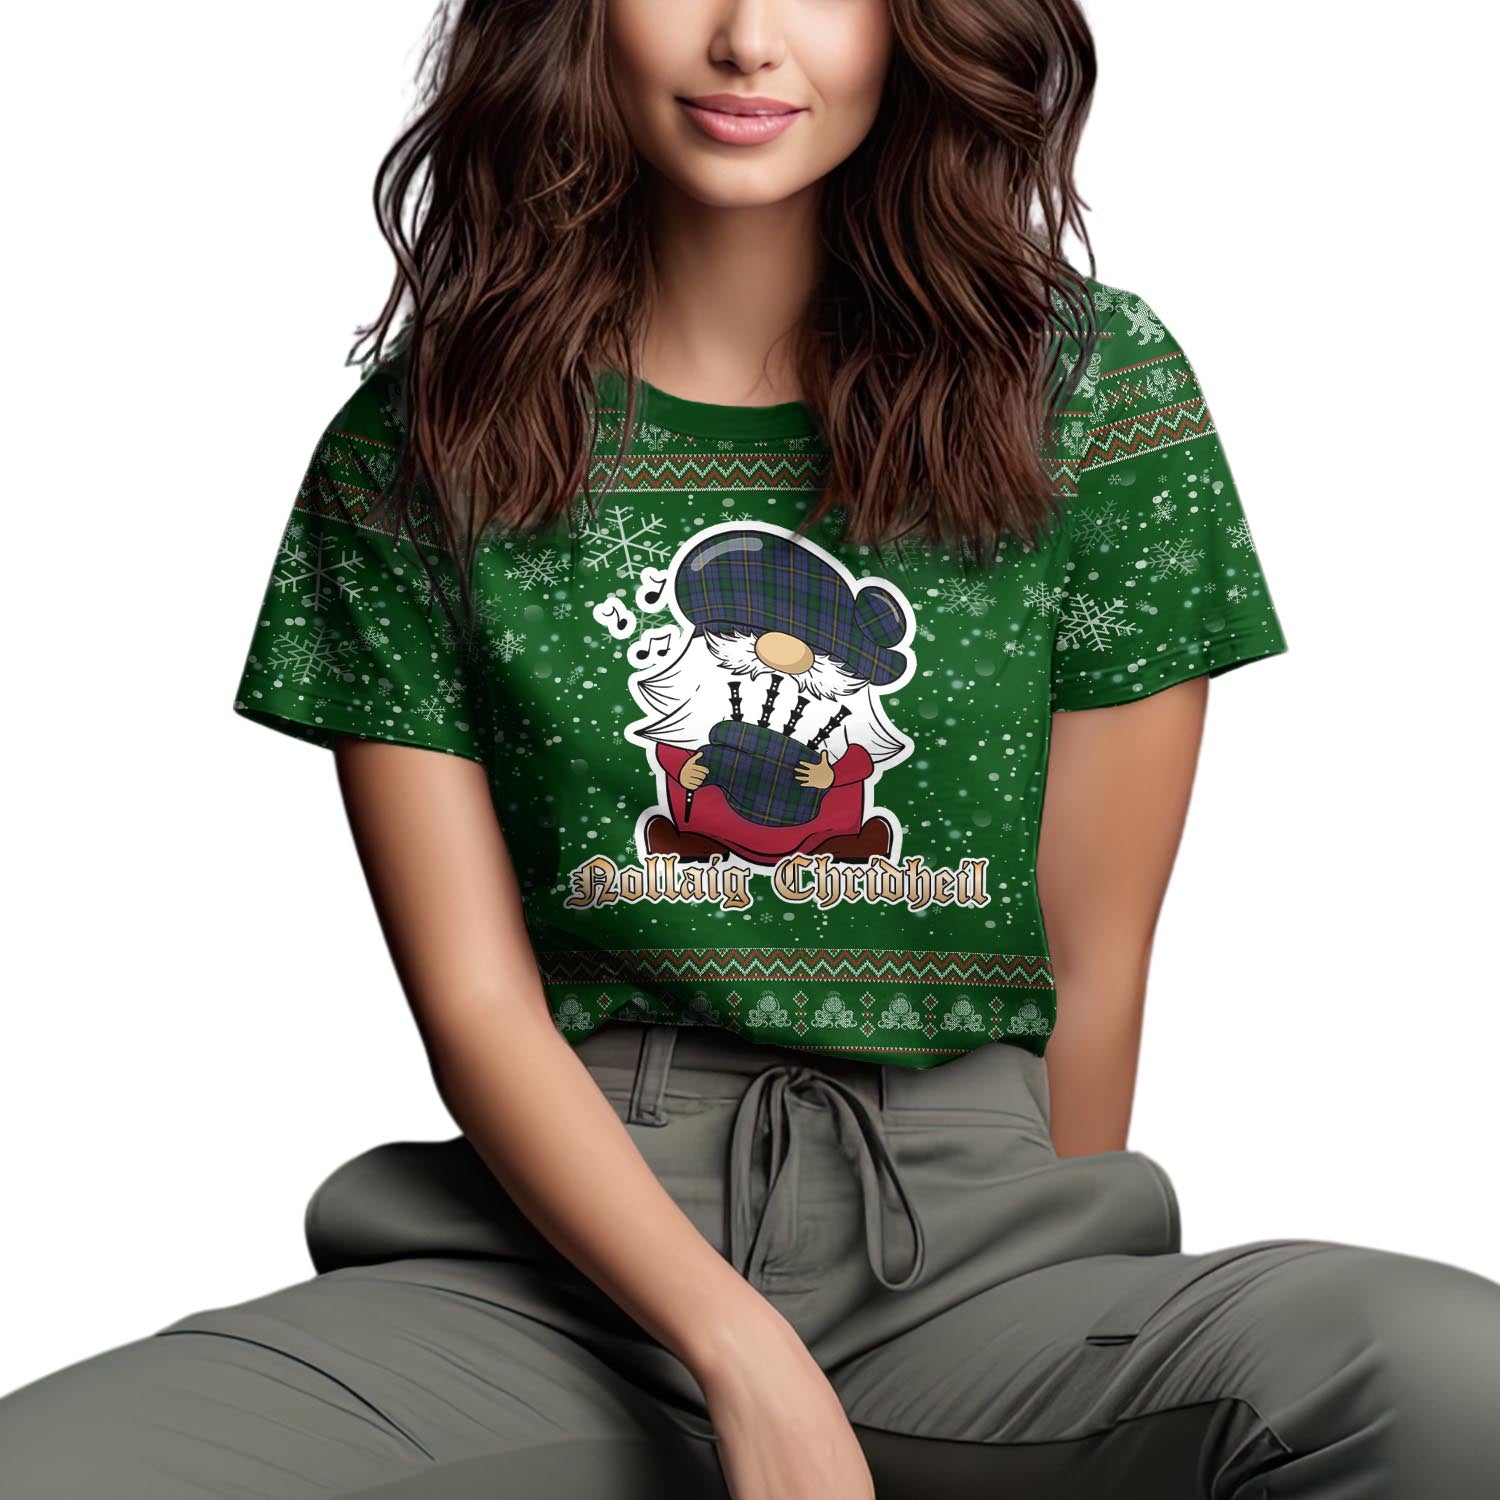 Hope Clan Originaux Clan Christmas Family T-Shirt with Funny Gnome Playing Bagpipes Women's Shirt Green - Tartanvibesclothing